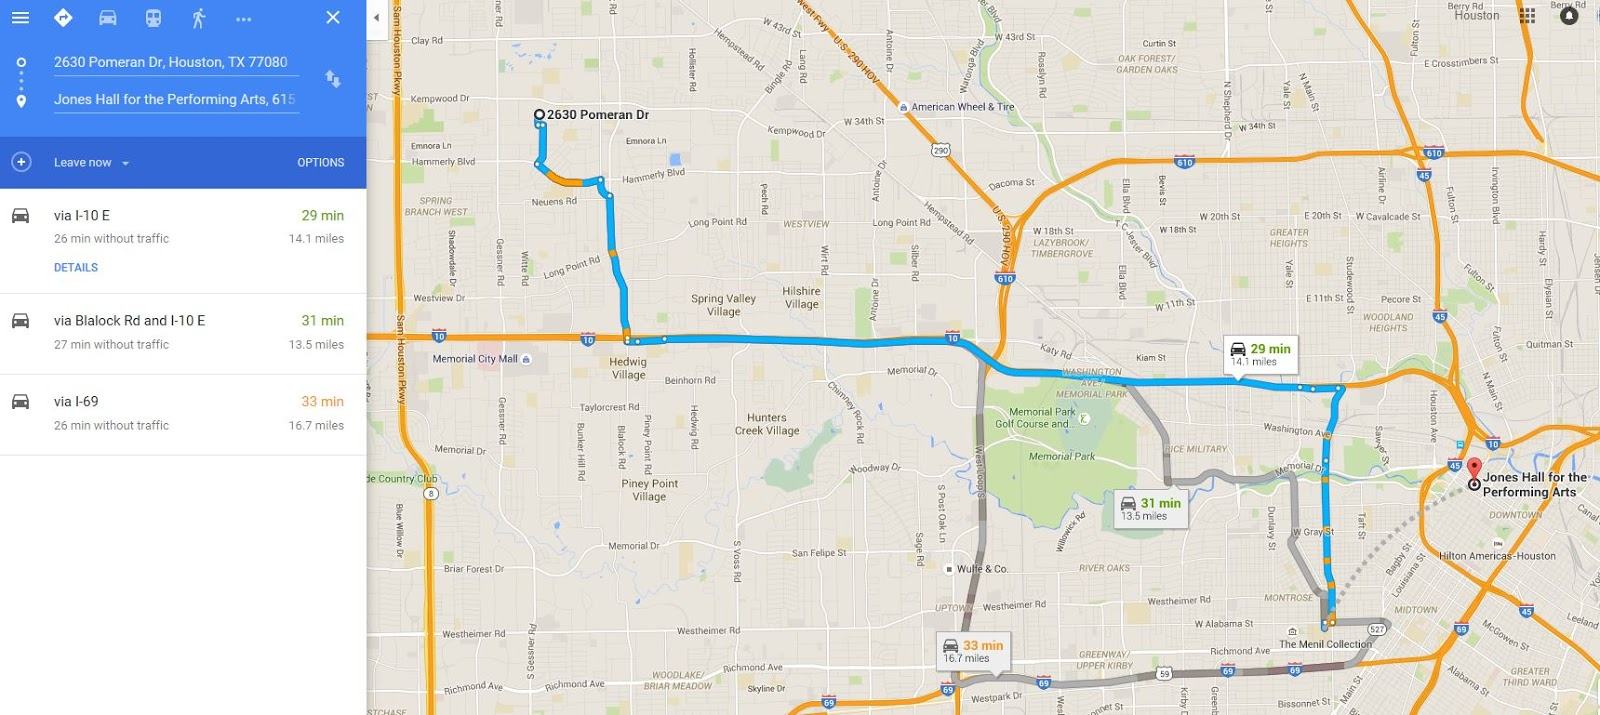 Houston Texas Google Maps | Business Ideas 2013 - Google Maps Texas Directions